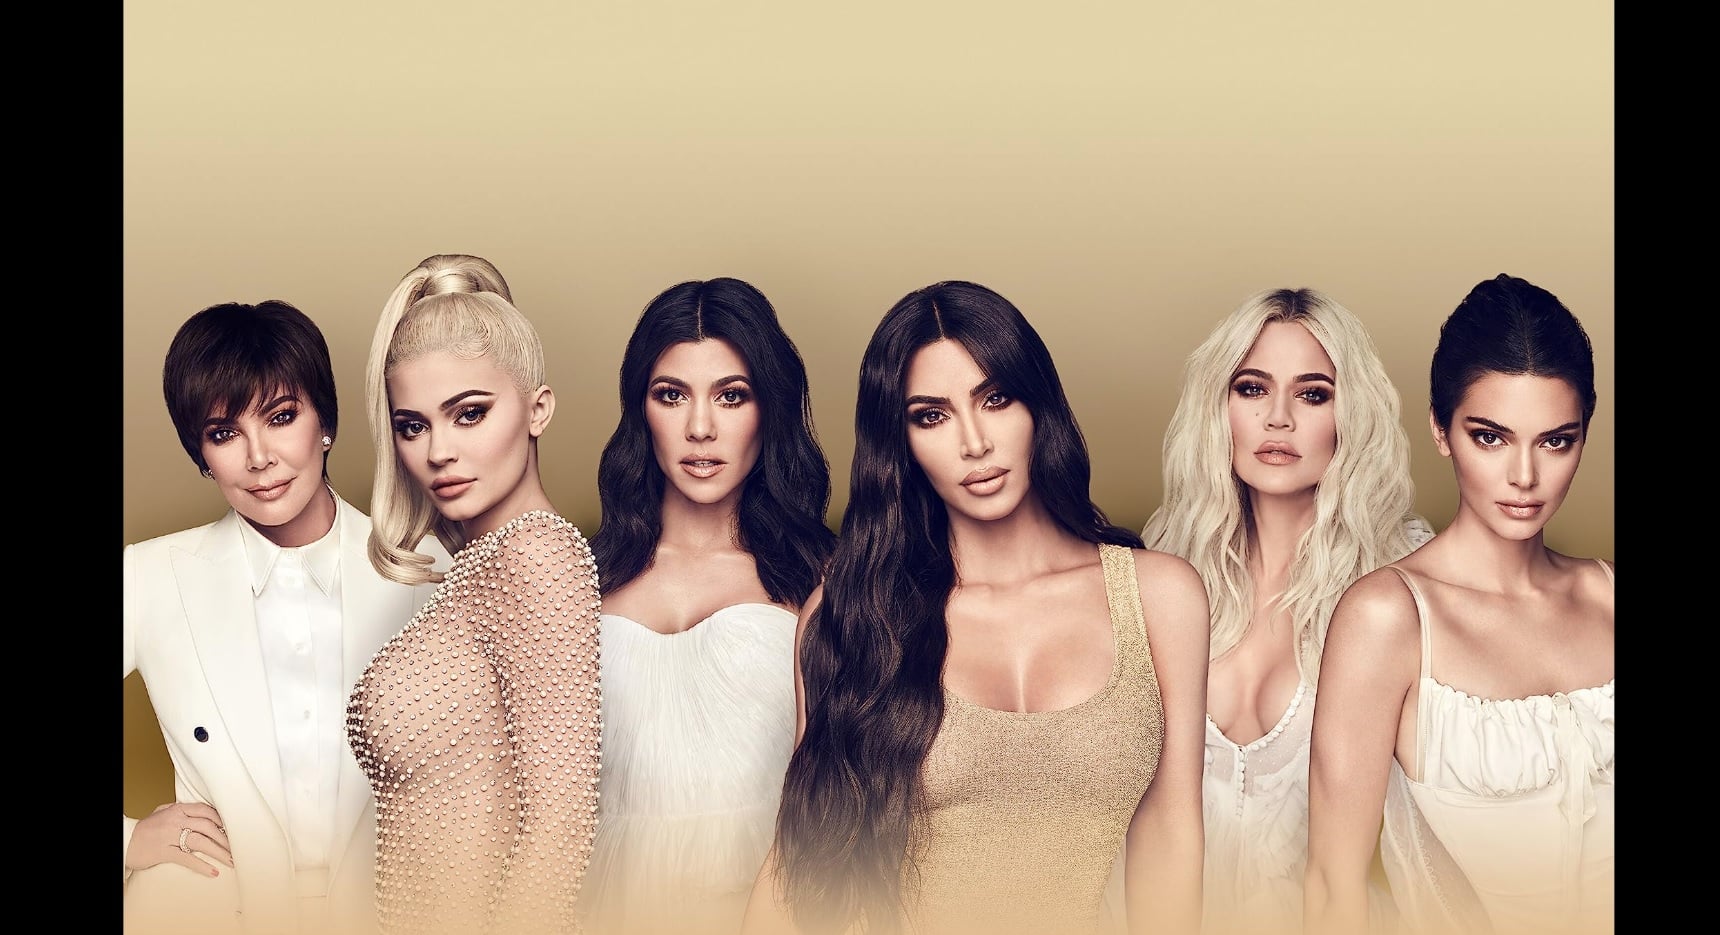 Kris Jenner, Kourtney Kardashian, Kim Kardashian, Kylie Jenner, Kendall Jenner, and Khloé Kardashian in Keeping Up with the Kardashians (2007)